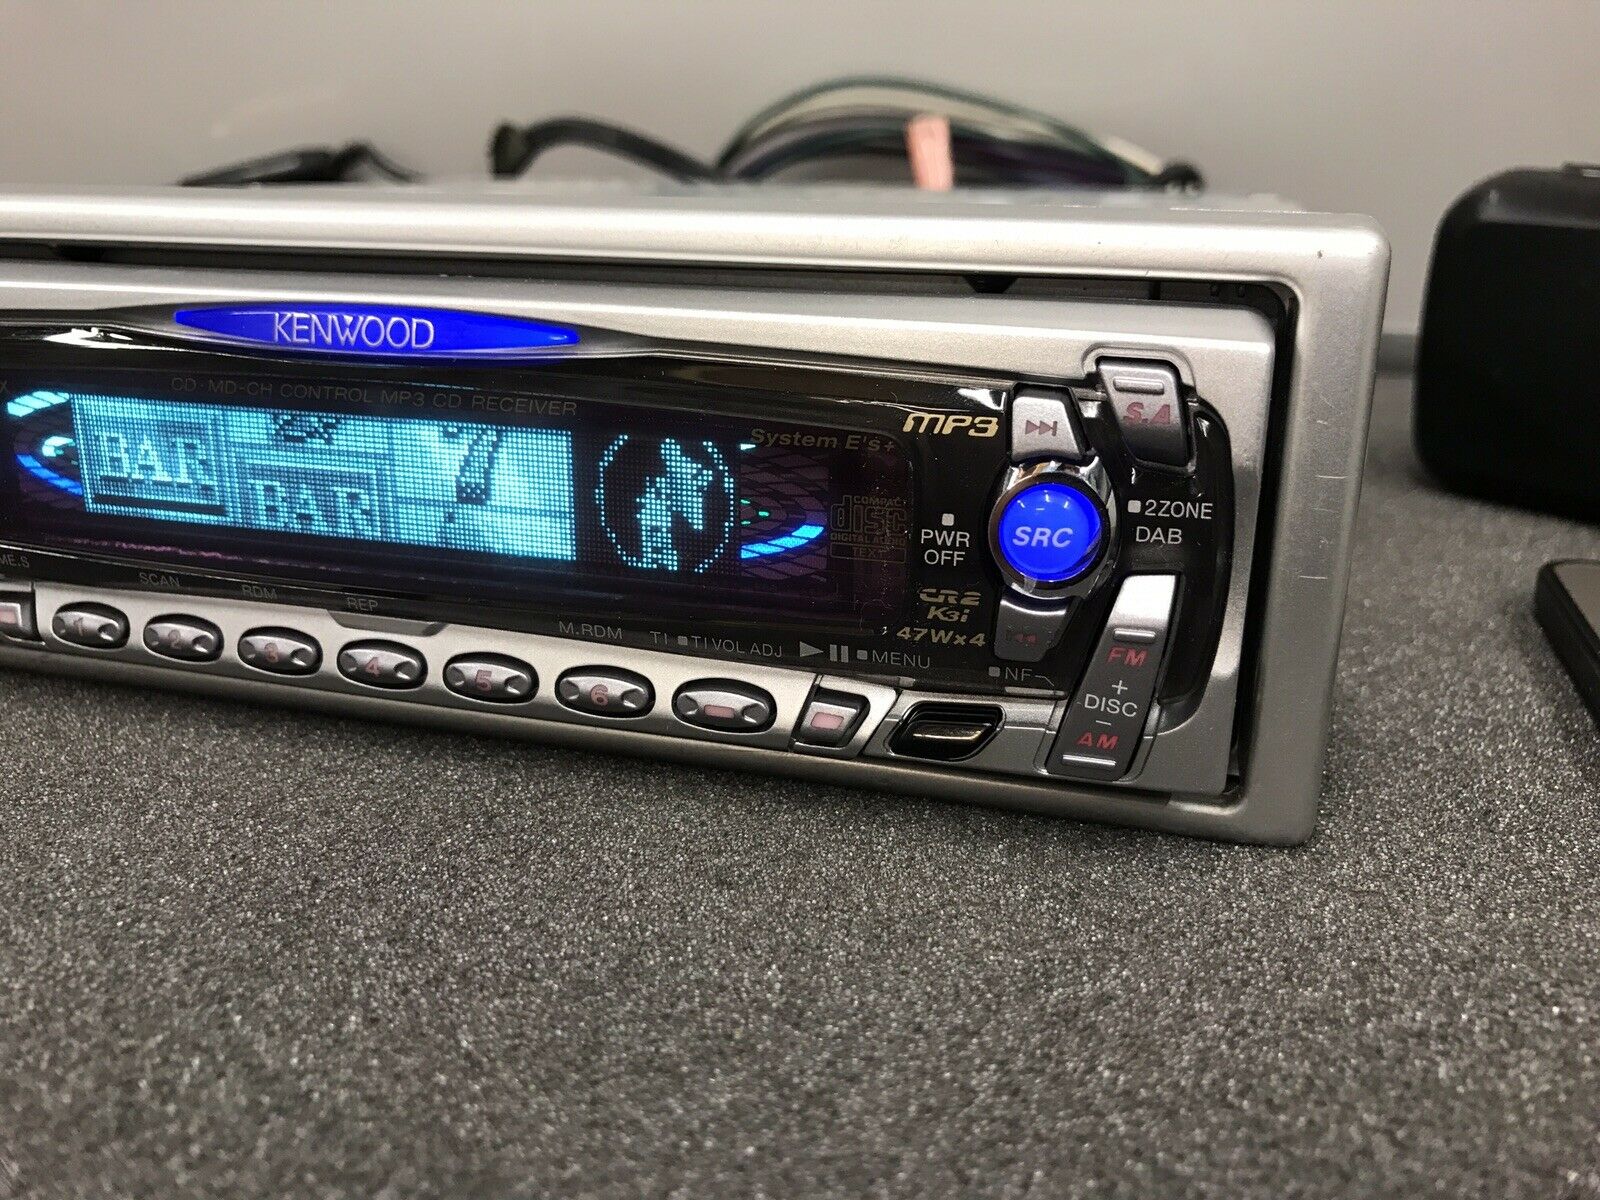 Kenwood Rare Classic Retro Car Radio Stereo Cd Mp3 Player Model Z828mp Top Spec